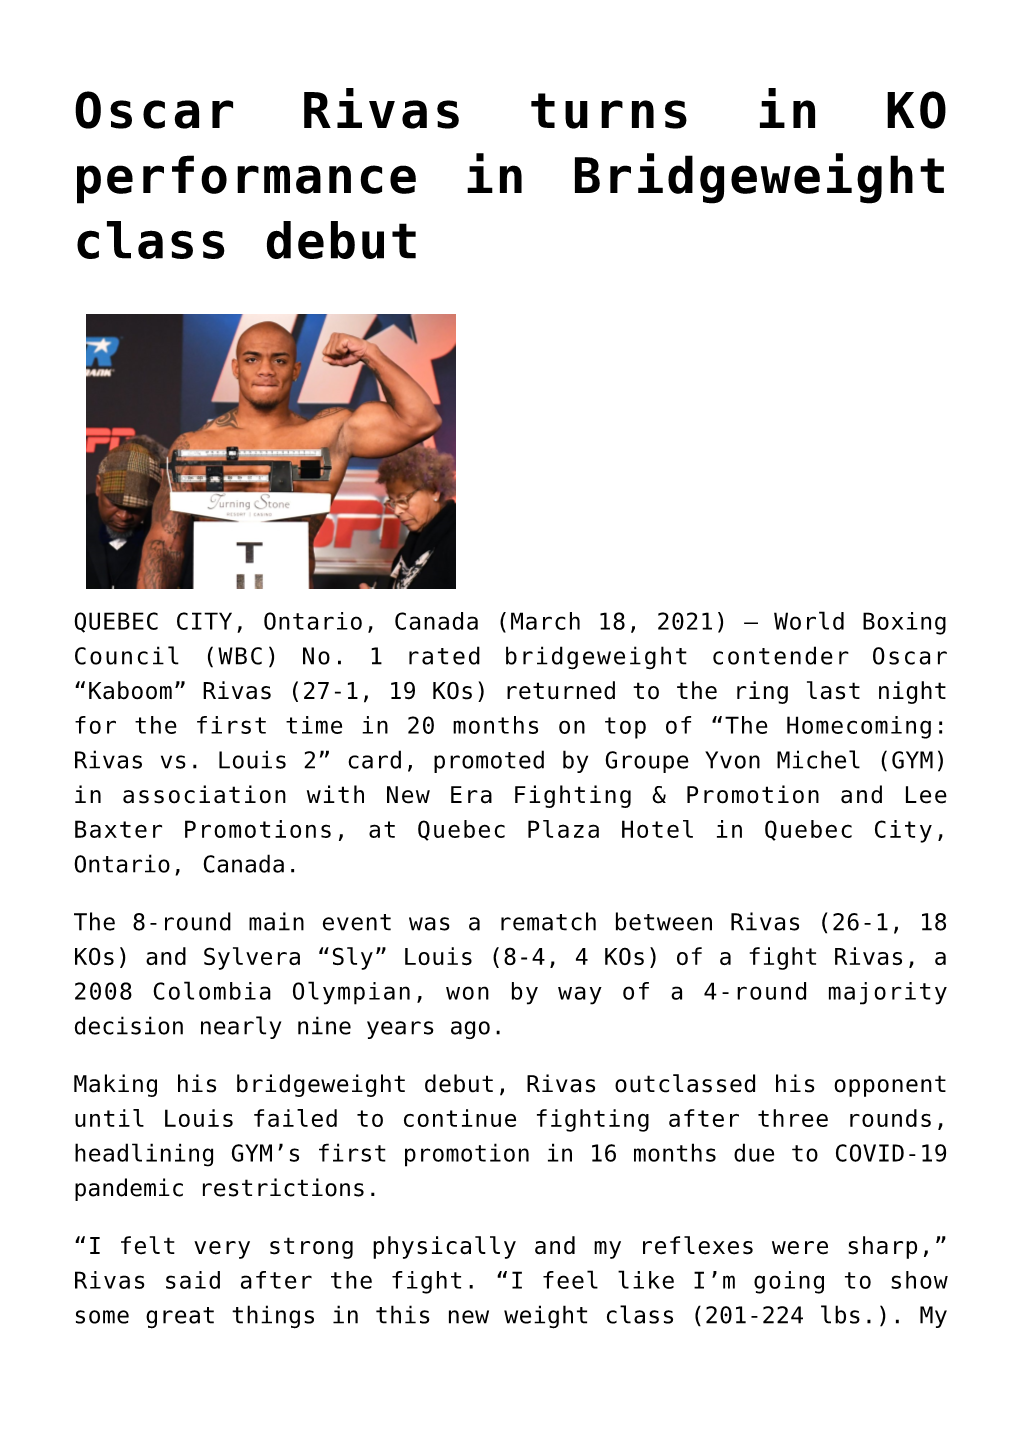 Oscar Rivas Turns in KO Performance in Bridgeweight Class Debut